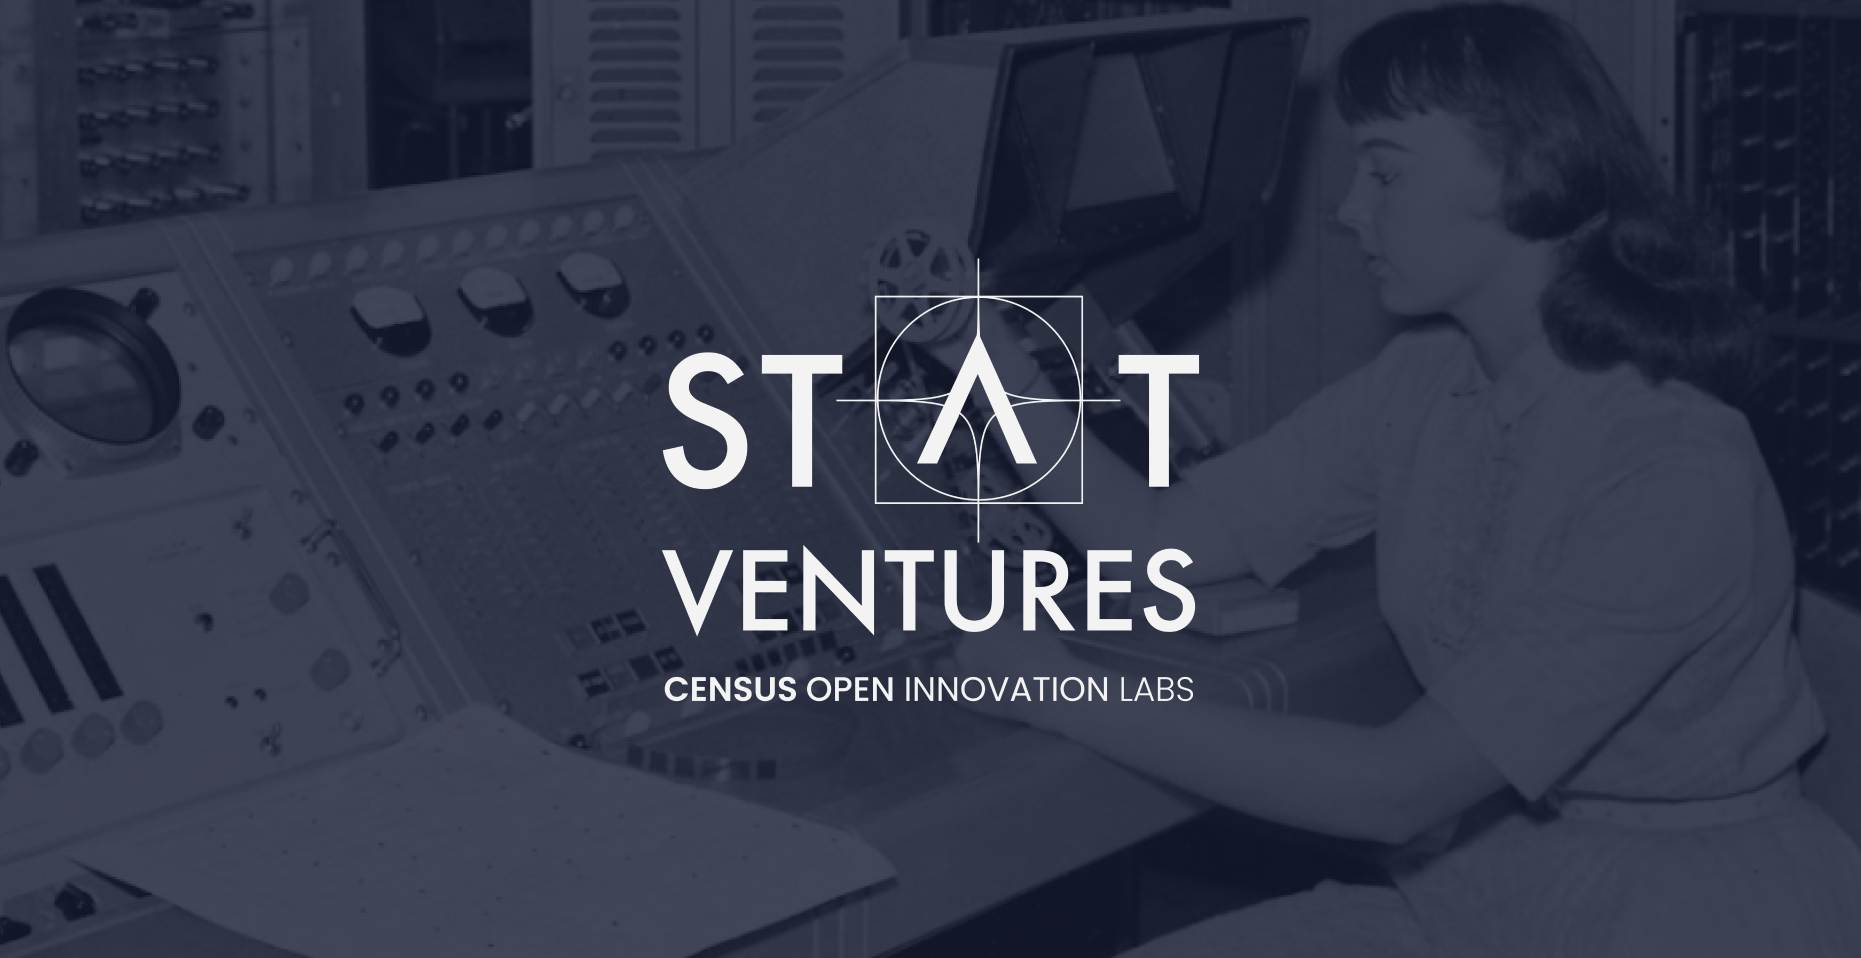 StatVentures Census Open Innovation Labs